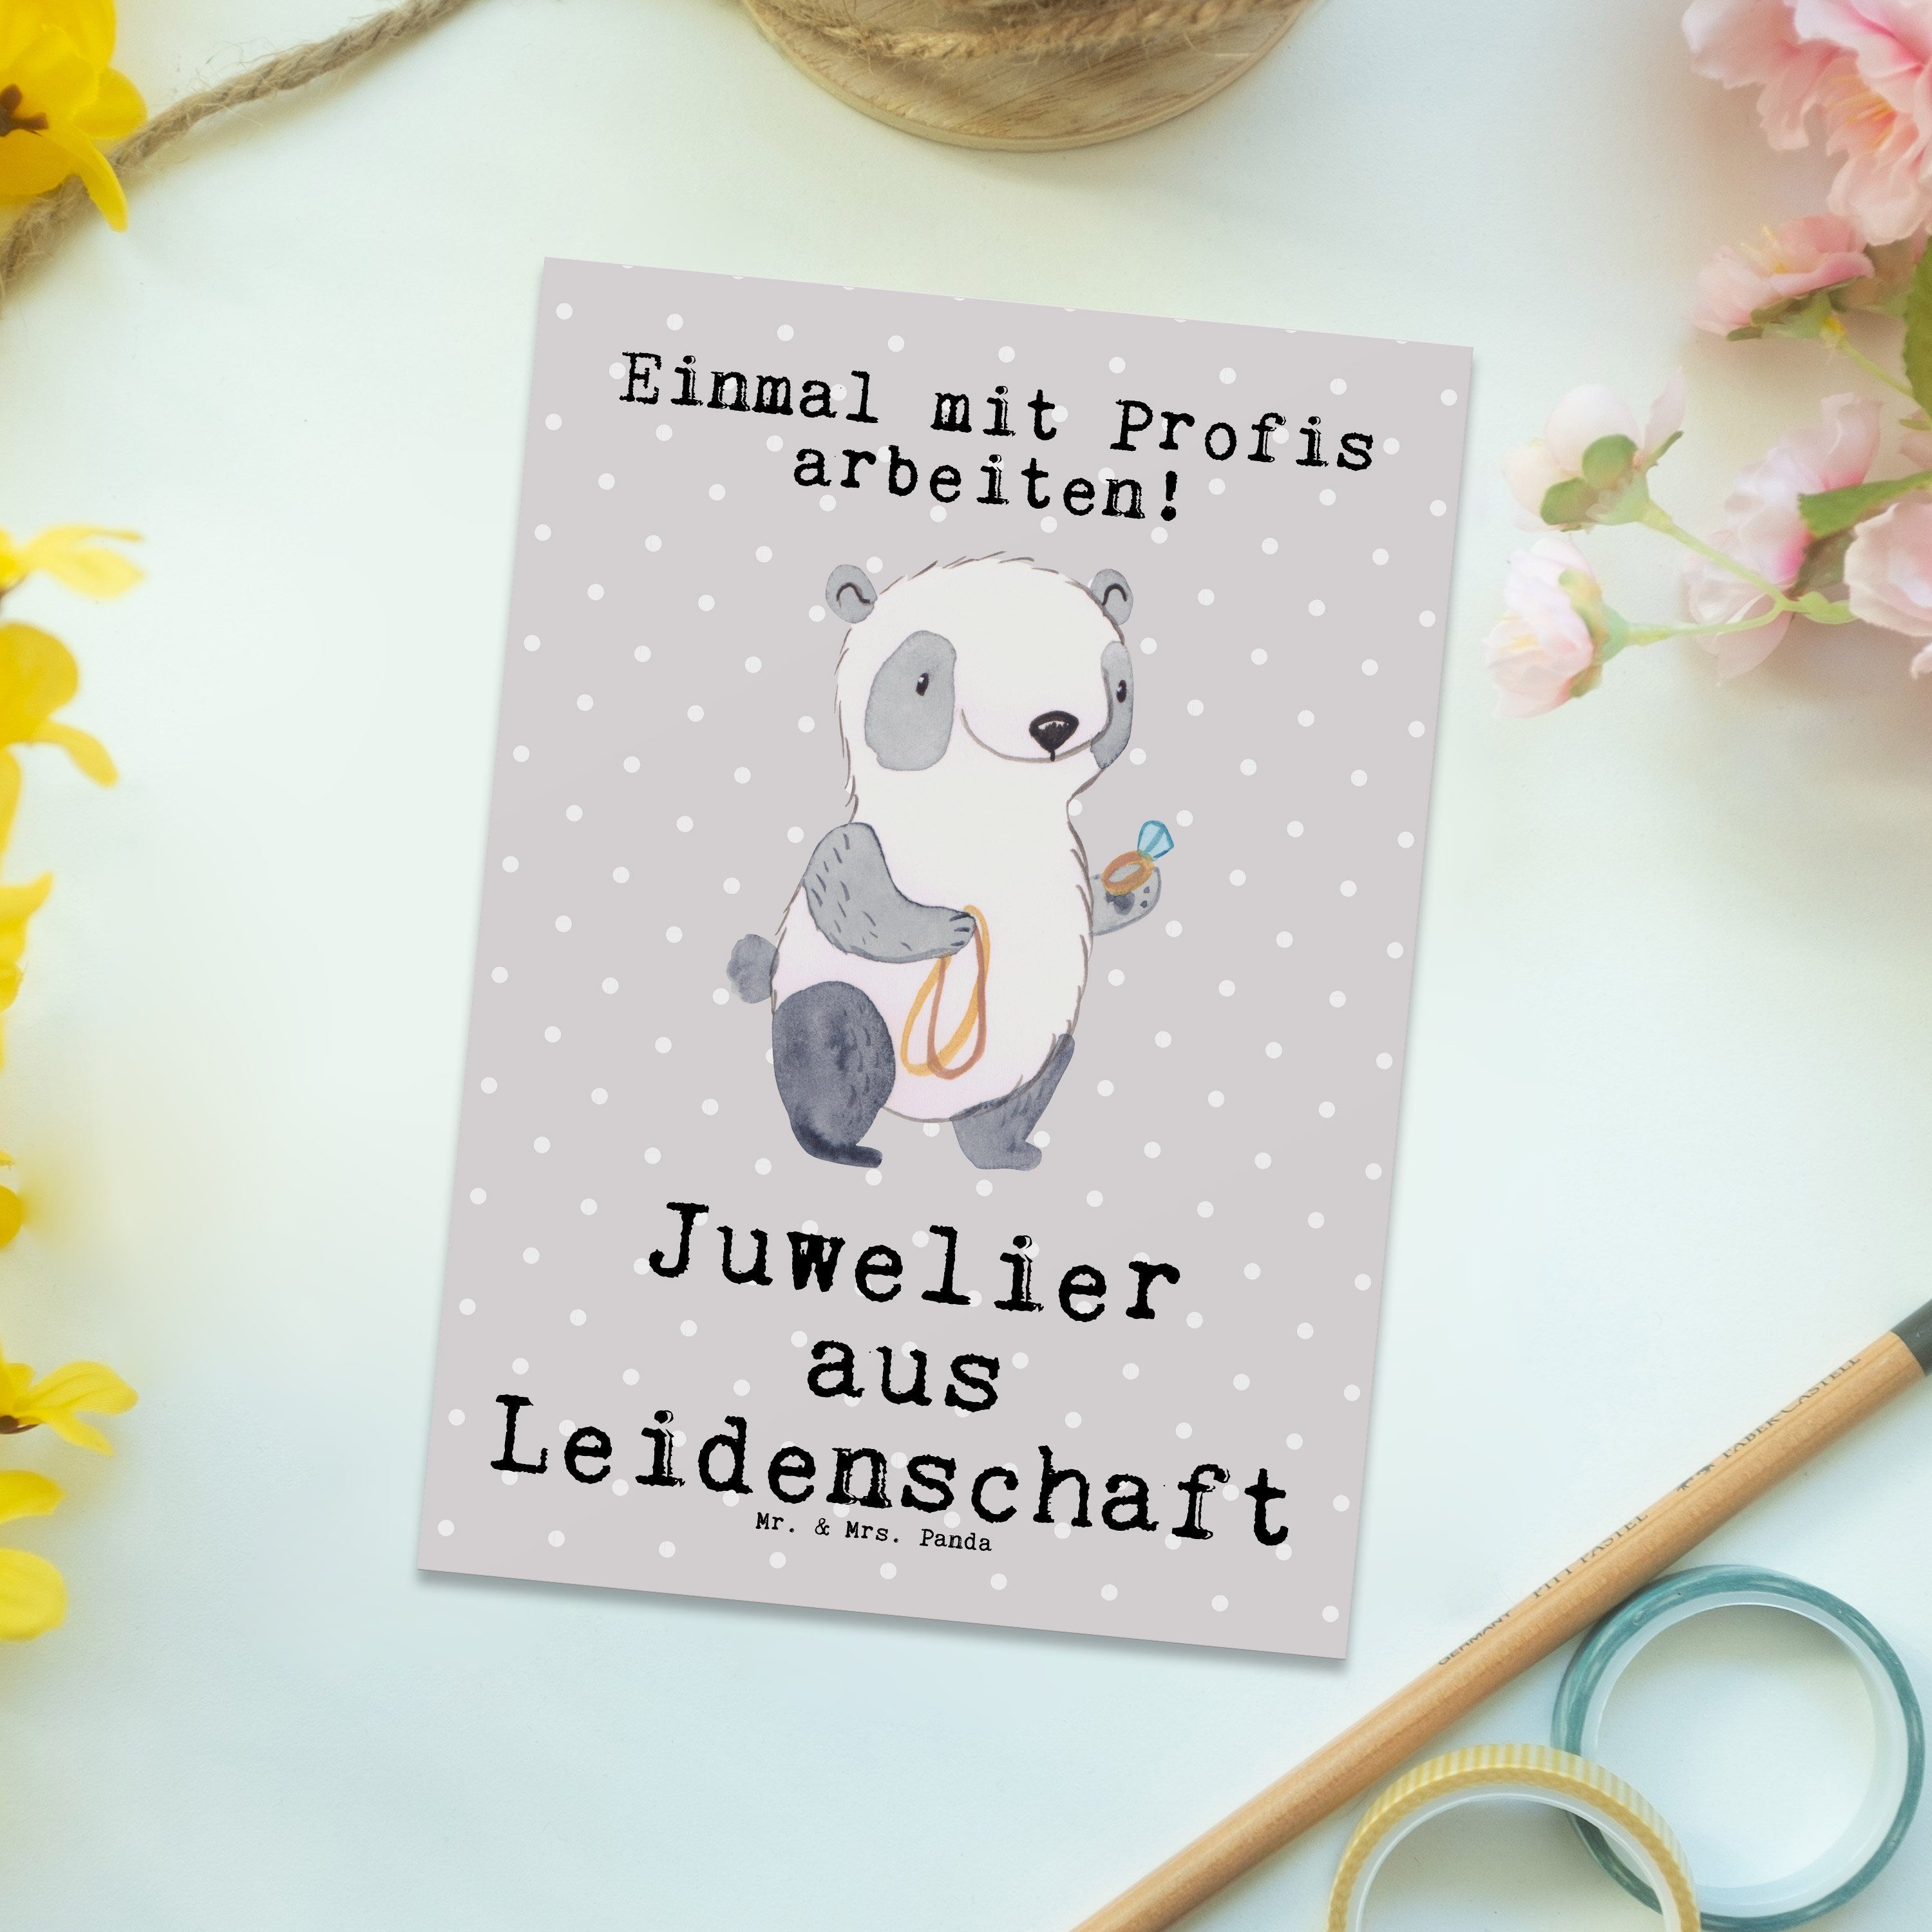 Grau Mitar Juwelier Eröffnung, & Pastell Postkarte Leidenschaft - Panda aus - Mrs. Mr. Geschenk,